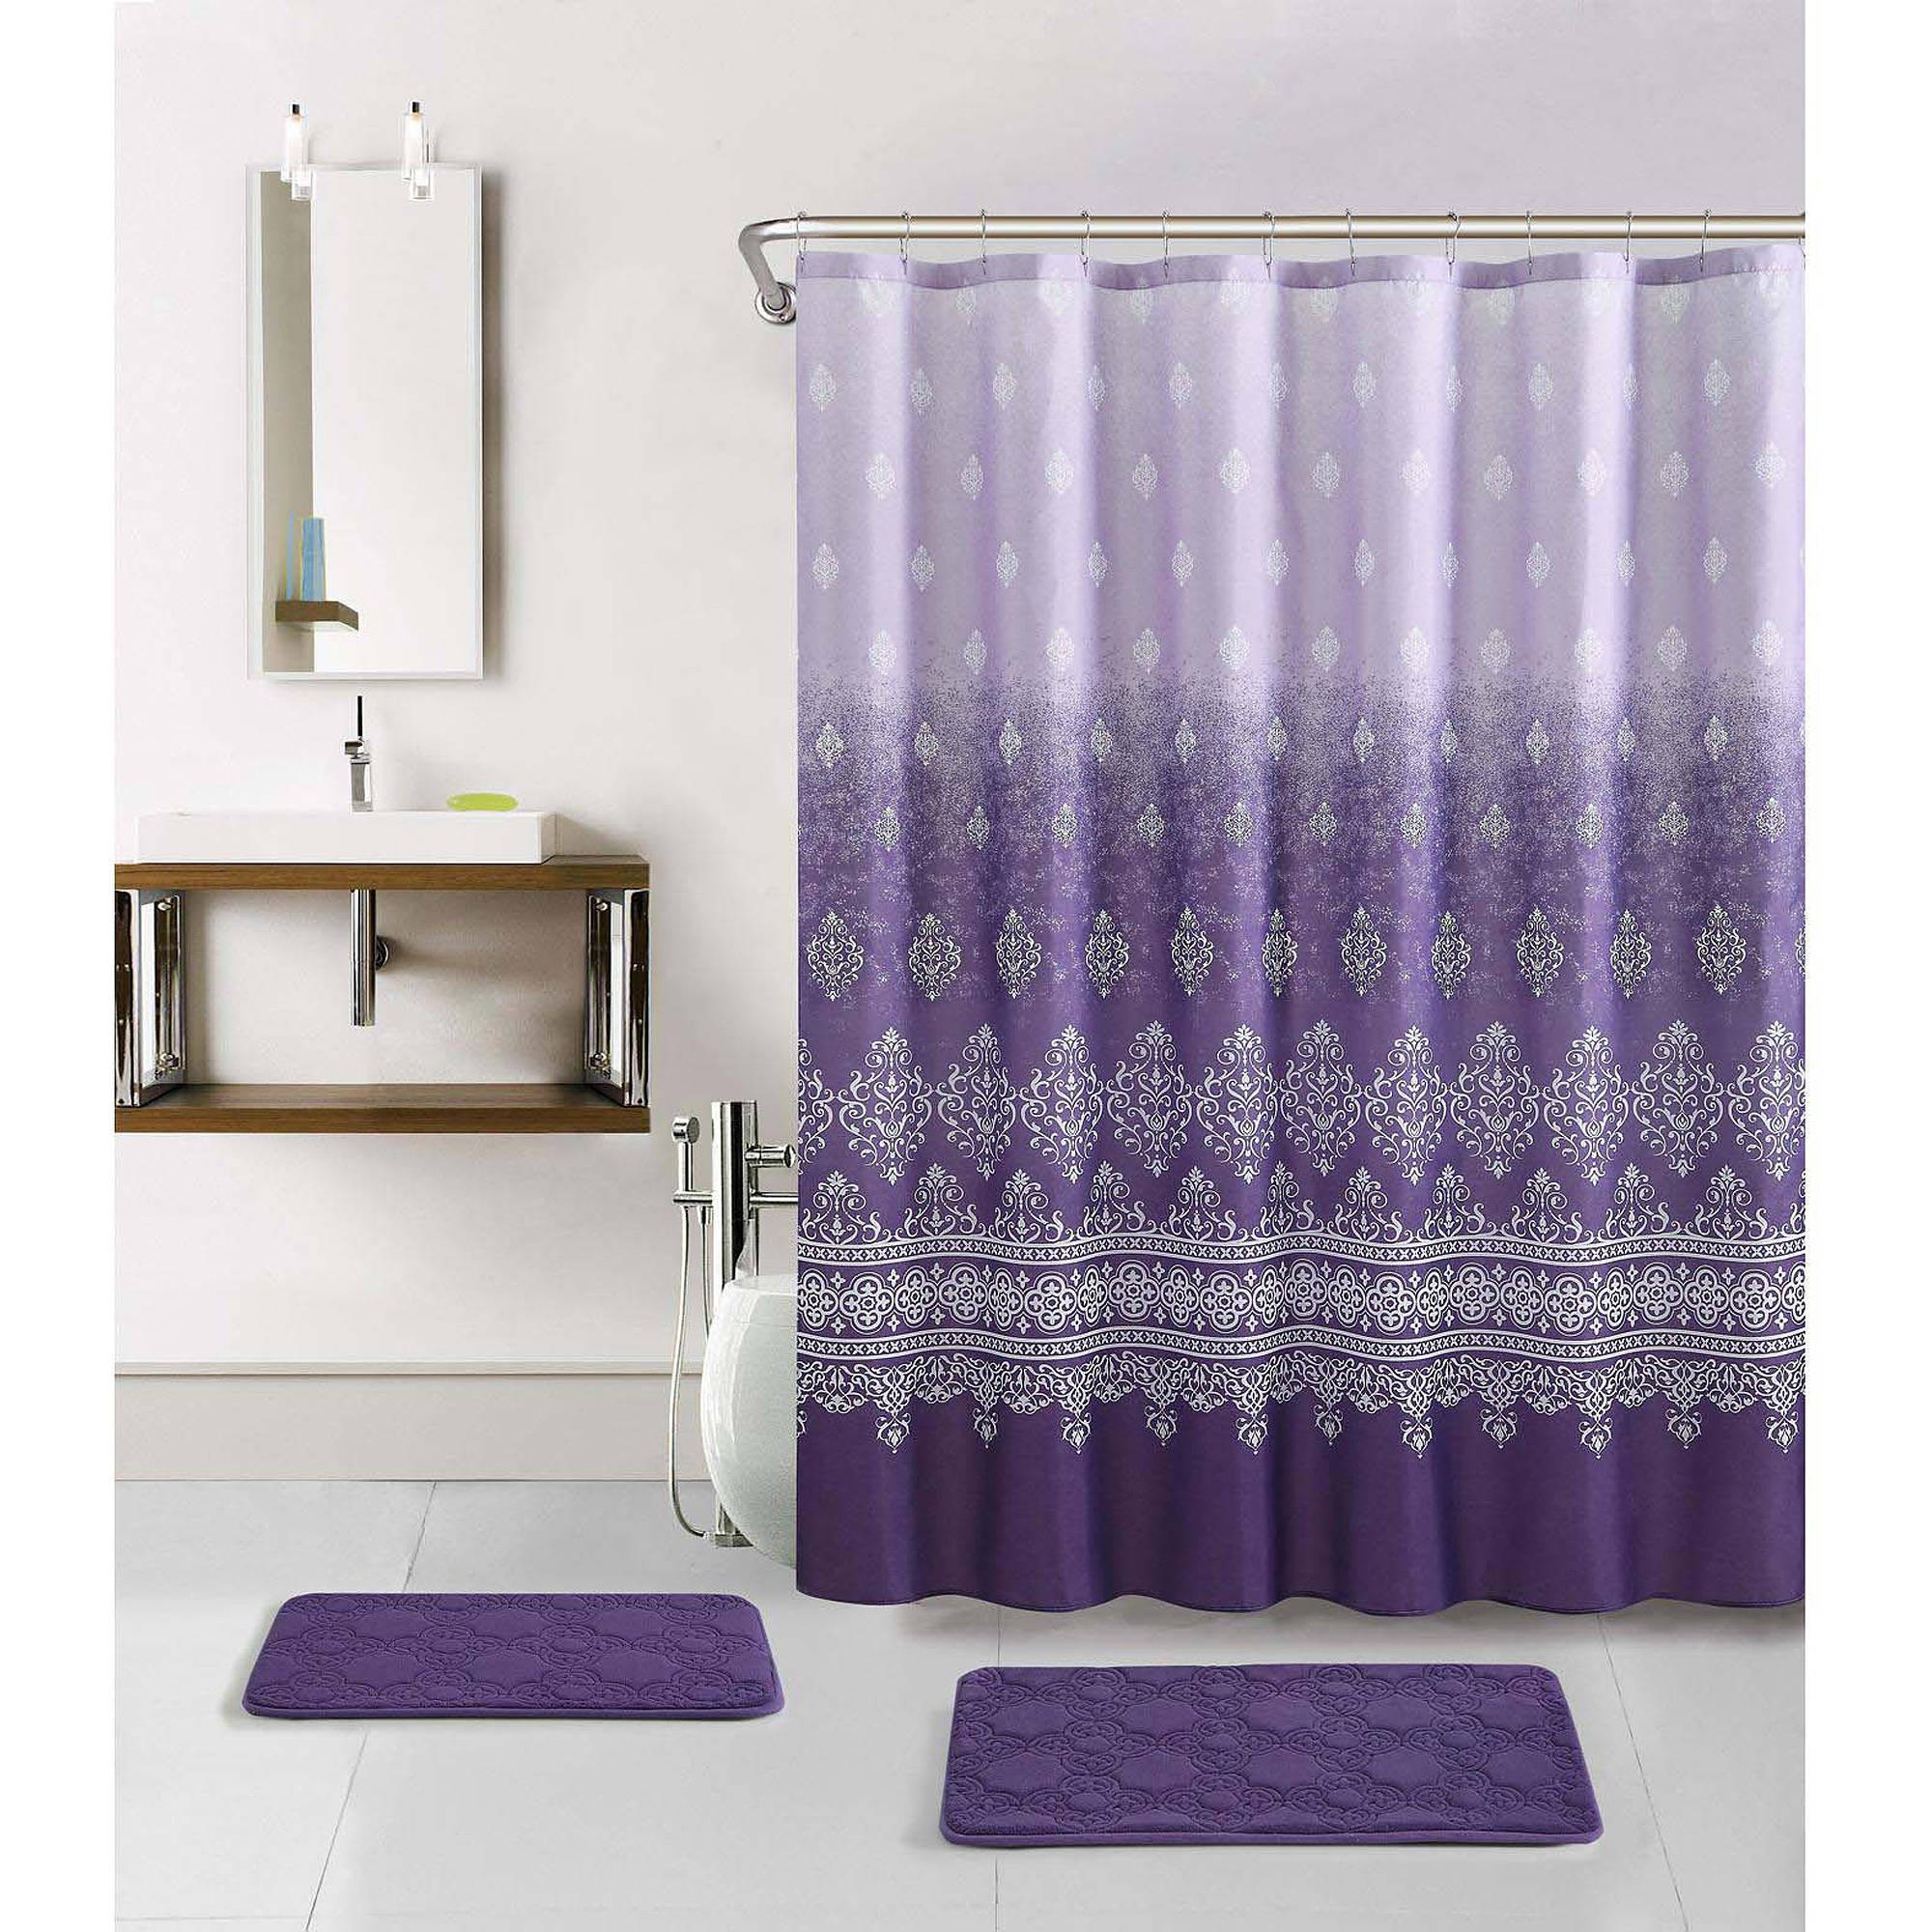 Bathroom Shower Curtains
 Curtain Walmart Shower Curtain For Cute Your Bathroom